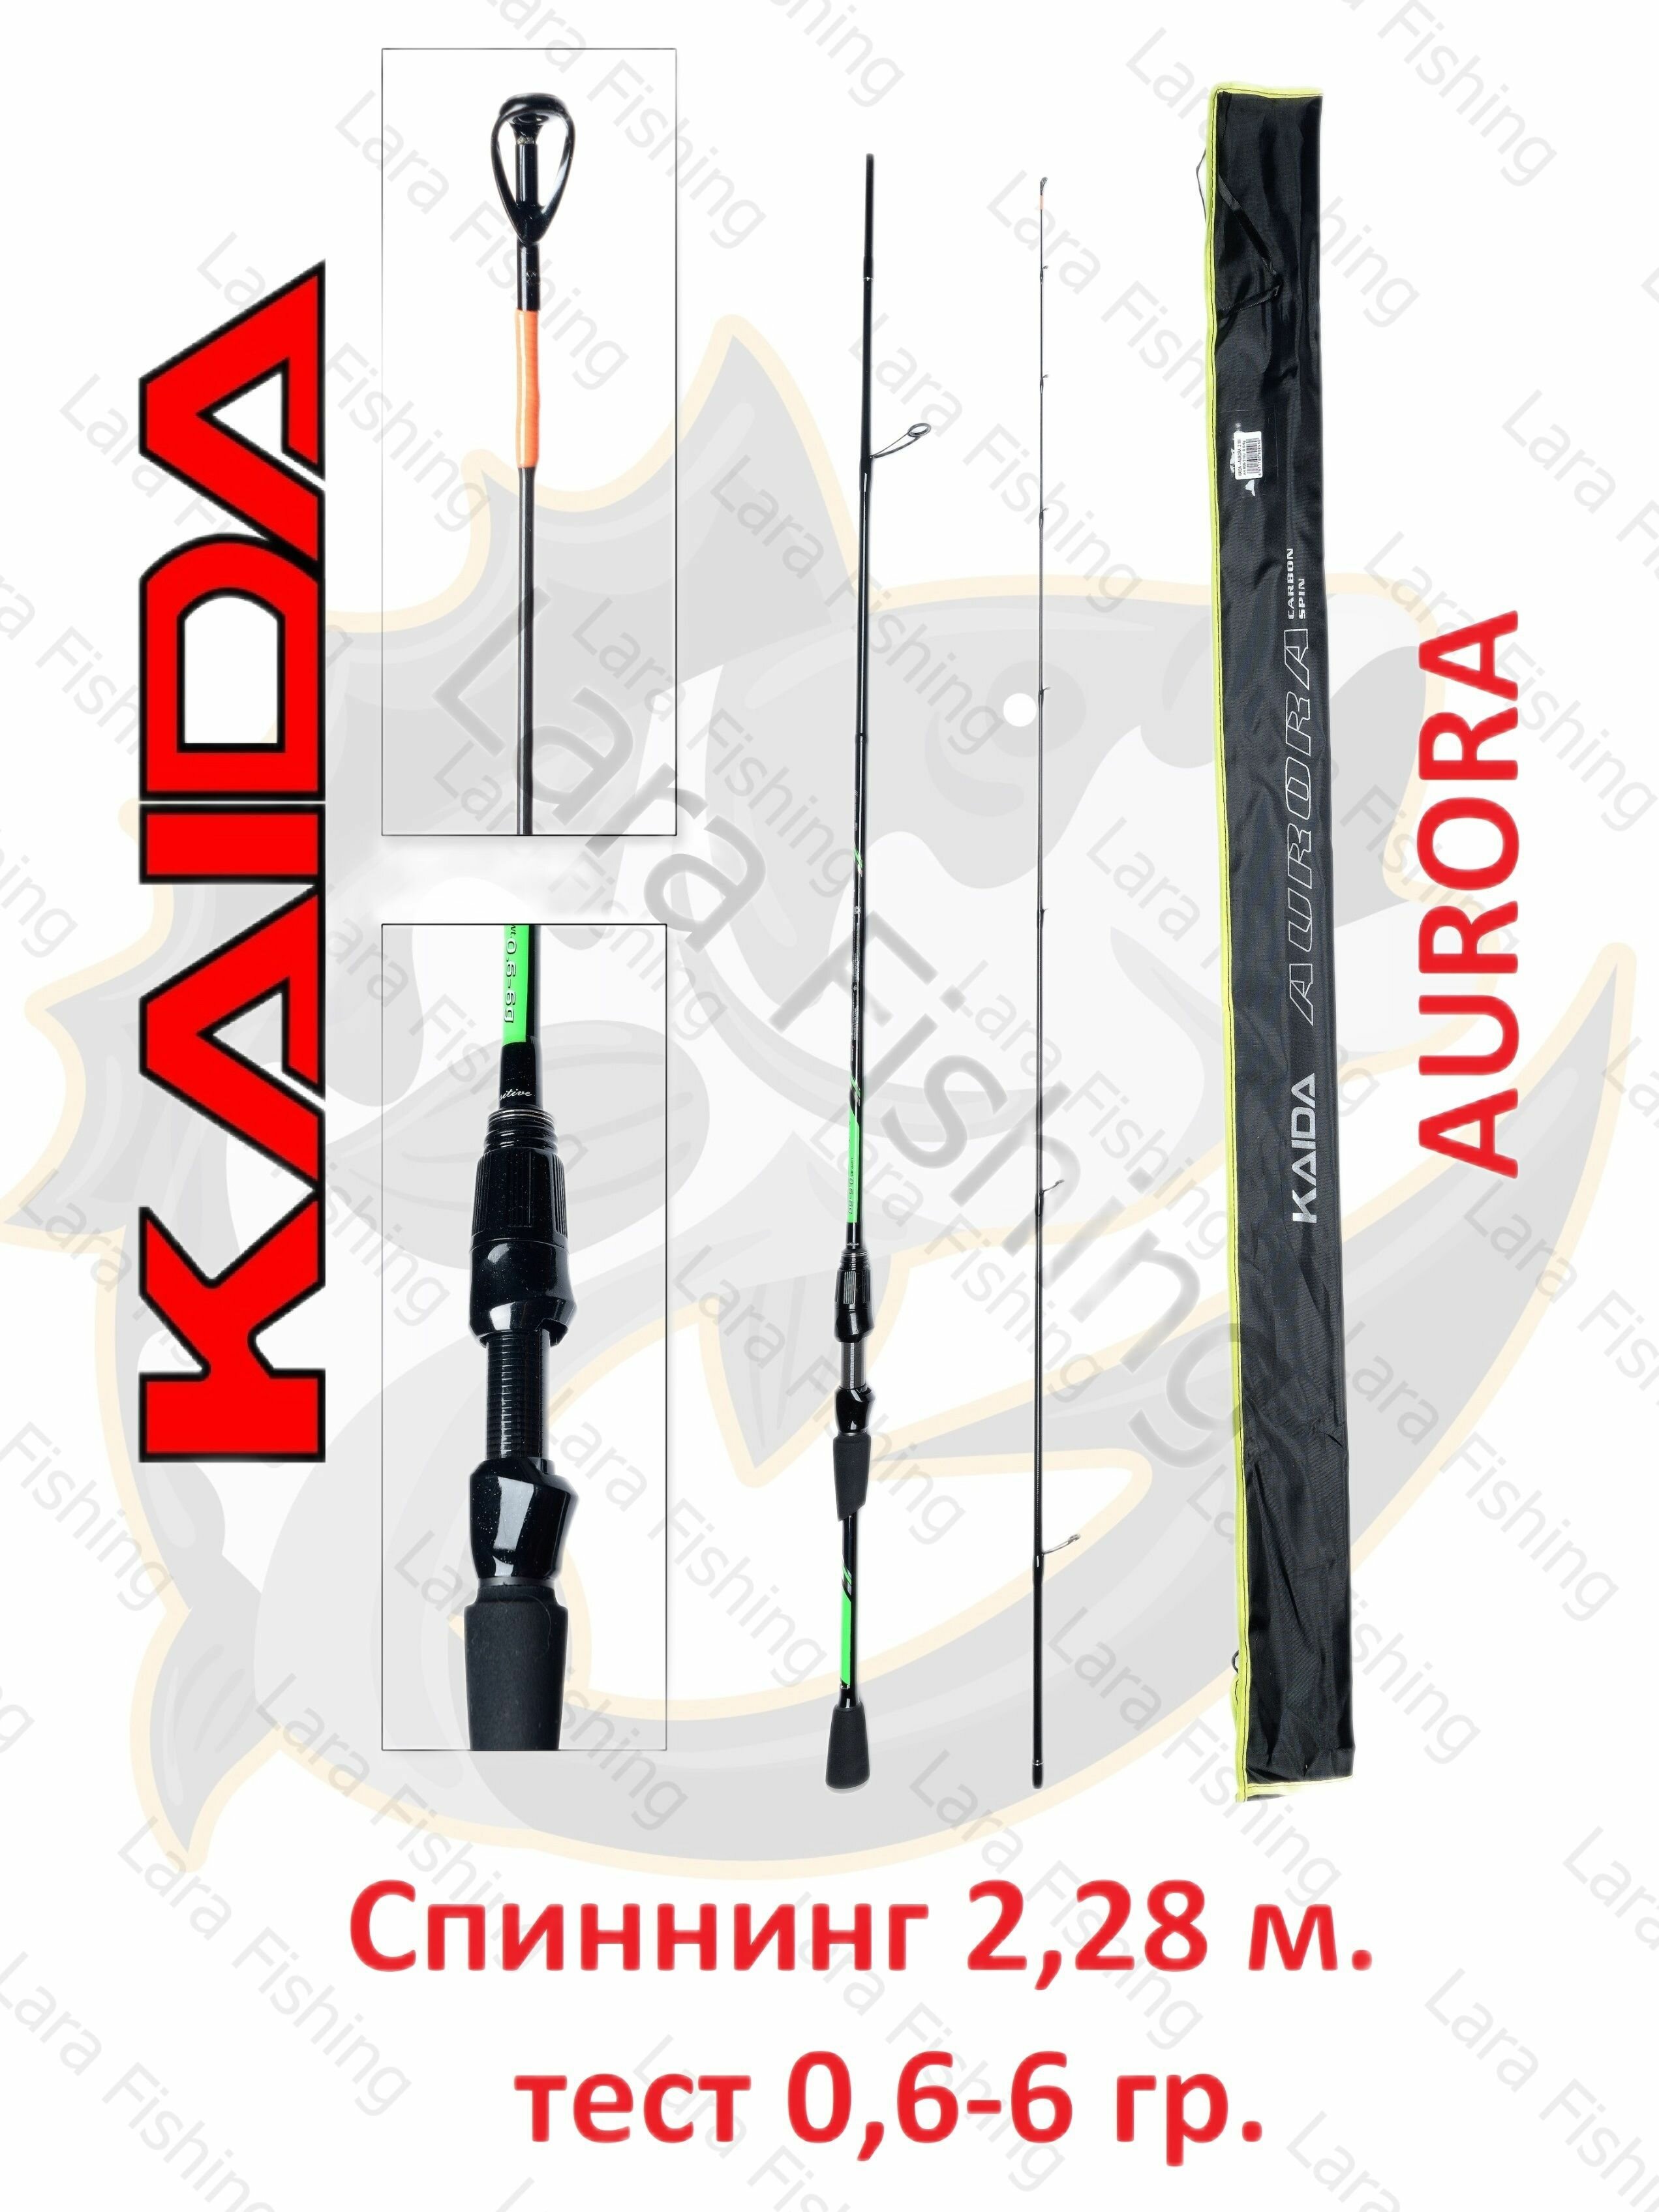 Спиннинг Kaida AURORA 2,28 м тест 0.6-6 гр